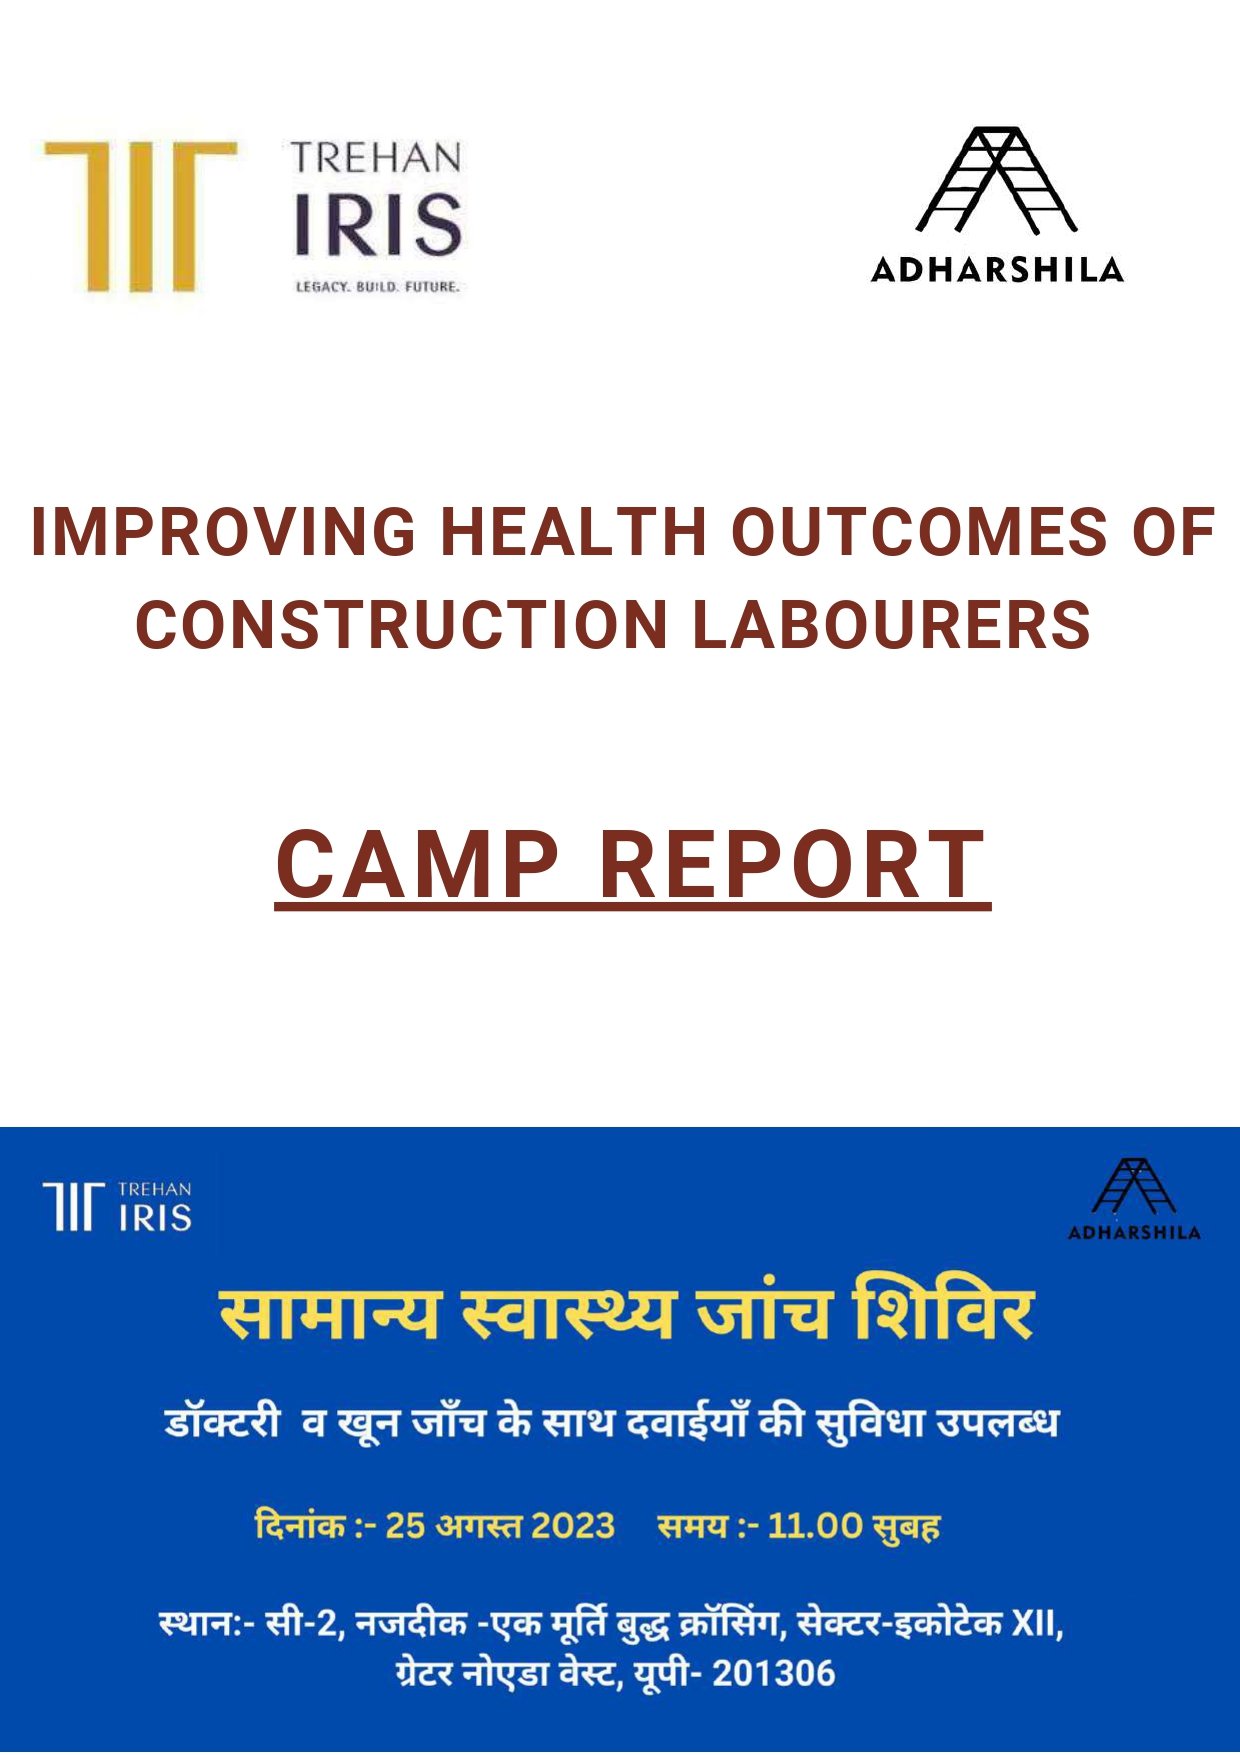 Adharshila+-+Trehan+Iris+Labour+Camp+Report-+August+2023++Noida+_compressed_page-0001.jpg